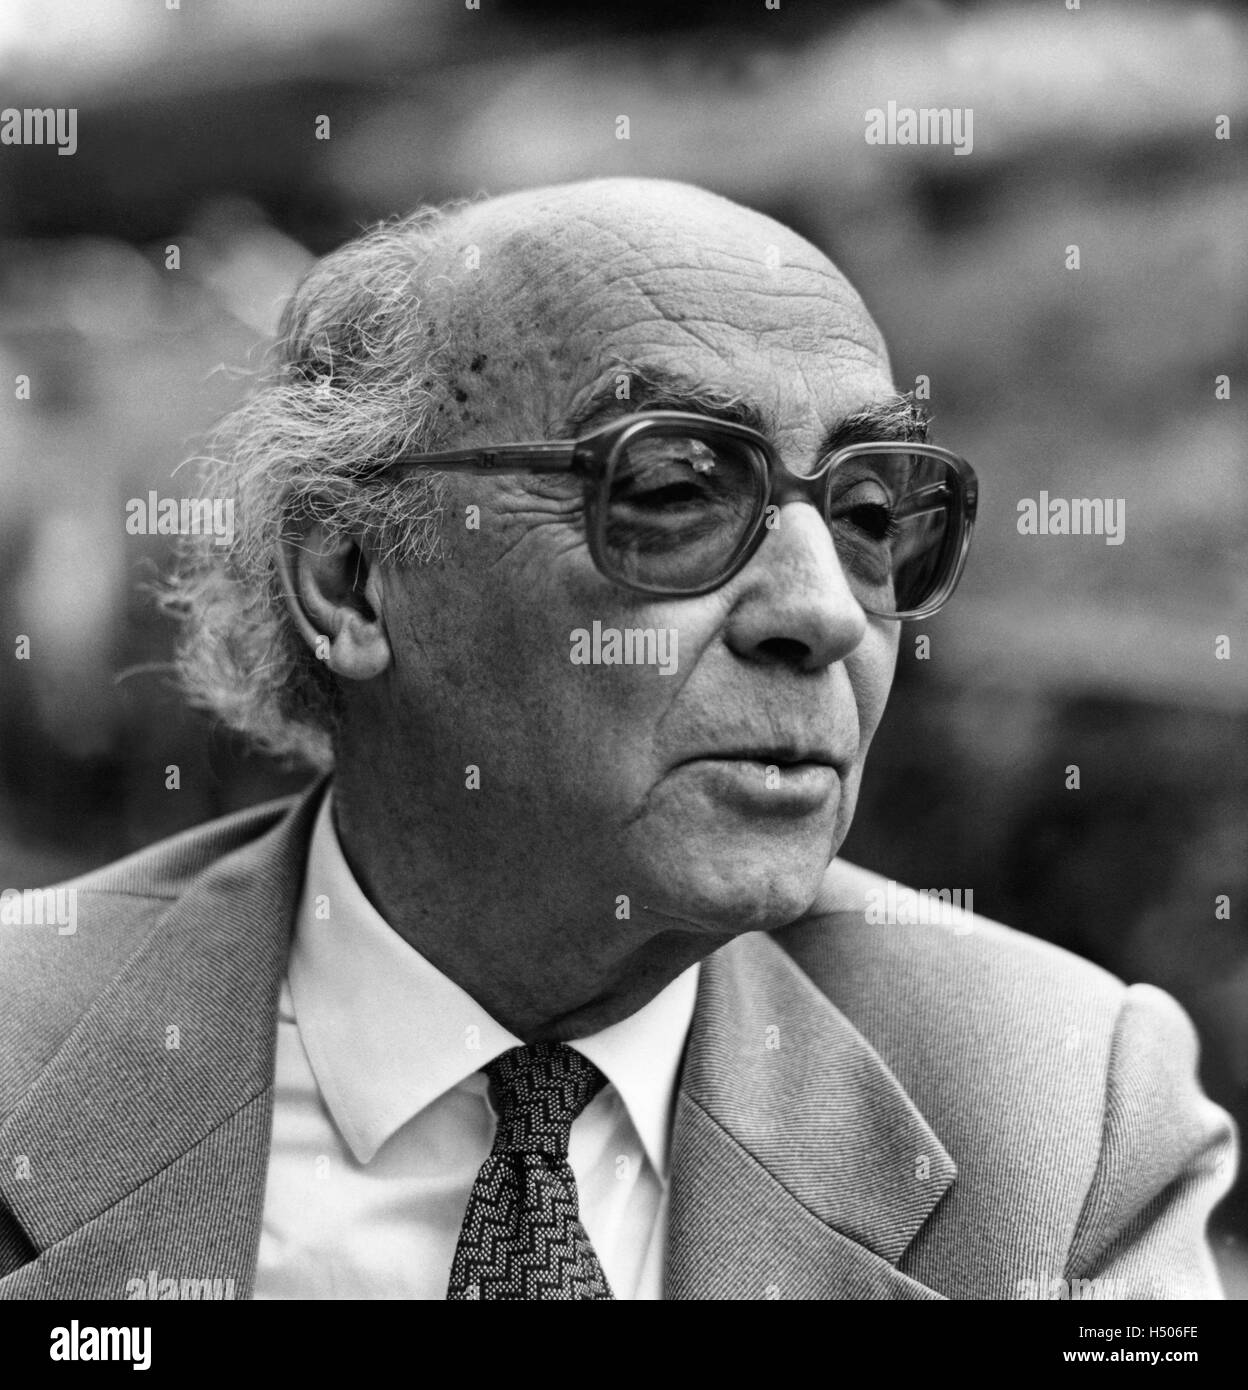 Nobel-winning author Jose Saramago dies at 87 - BBC News